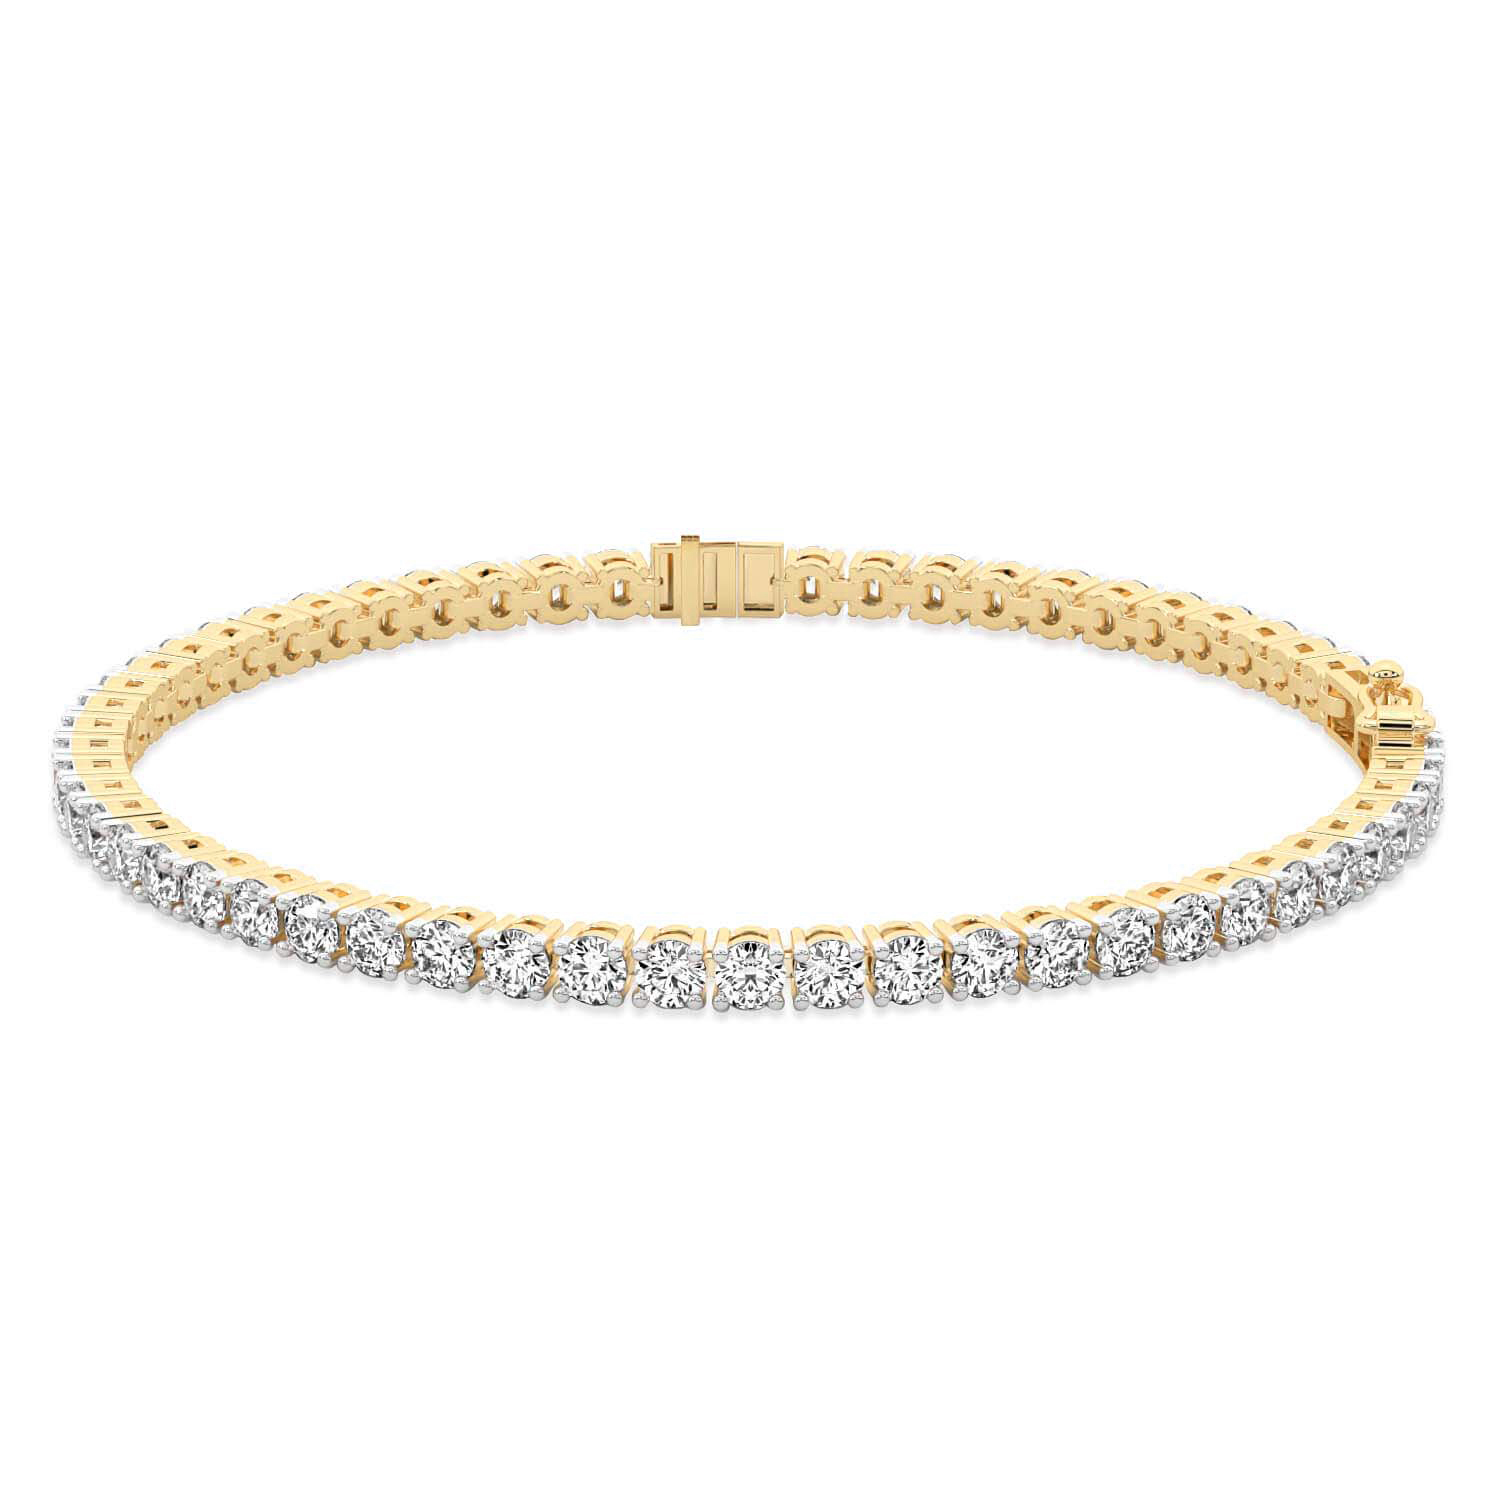 Darcy Round Lab Diamond Tennis Bracelet yellow gold bracelet, small front view